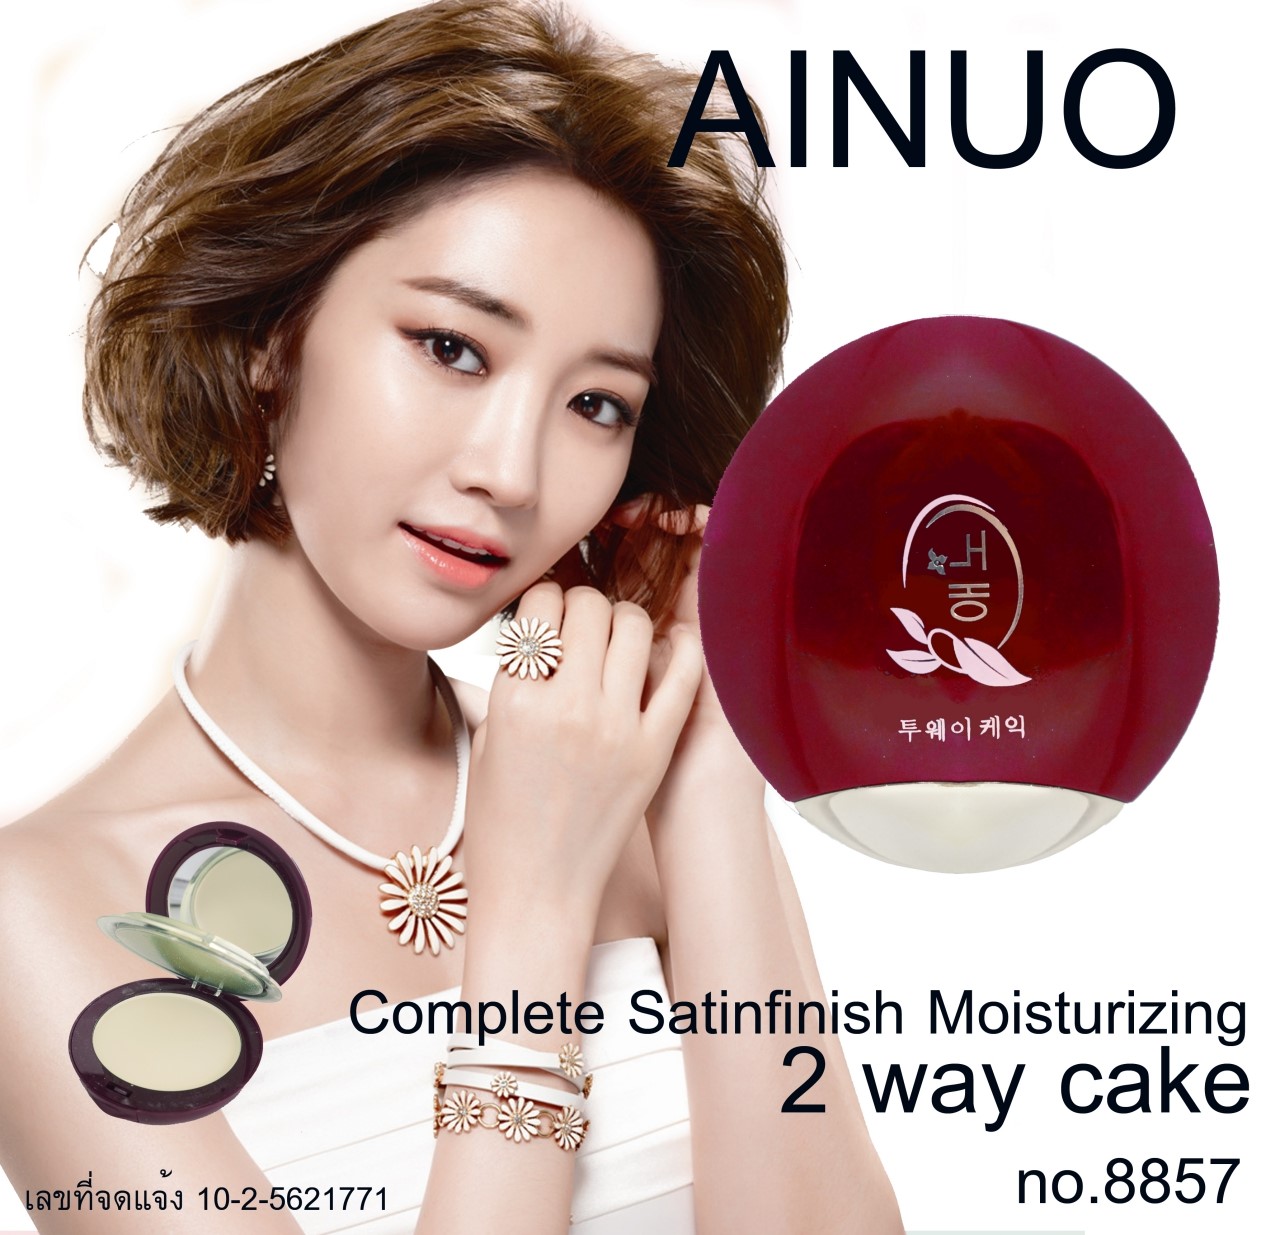 ainuo no.8857 Complete Satinfinish Moisturizing Two way cake 26g (เนื้อแมท 2 ชั้น)  (MM) แป้งเกาหลี 